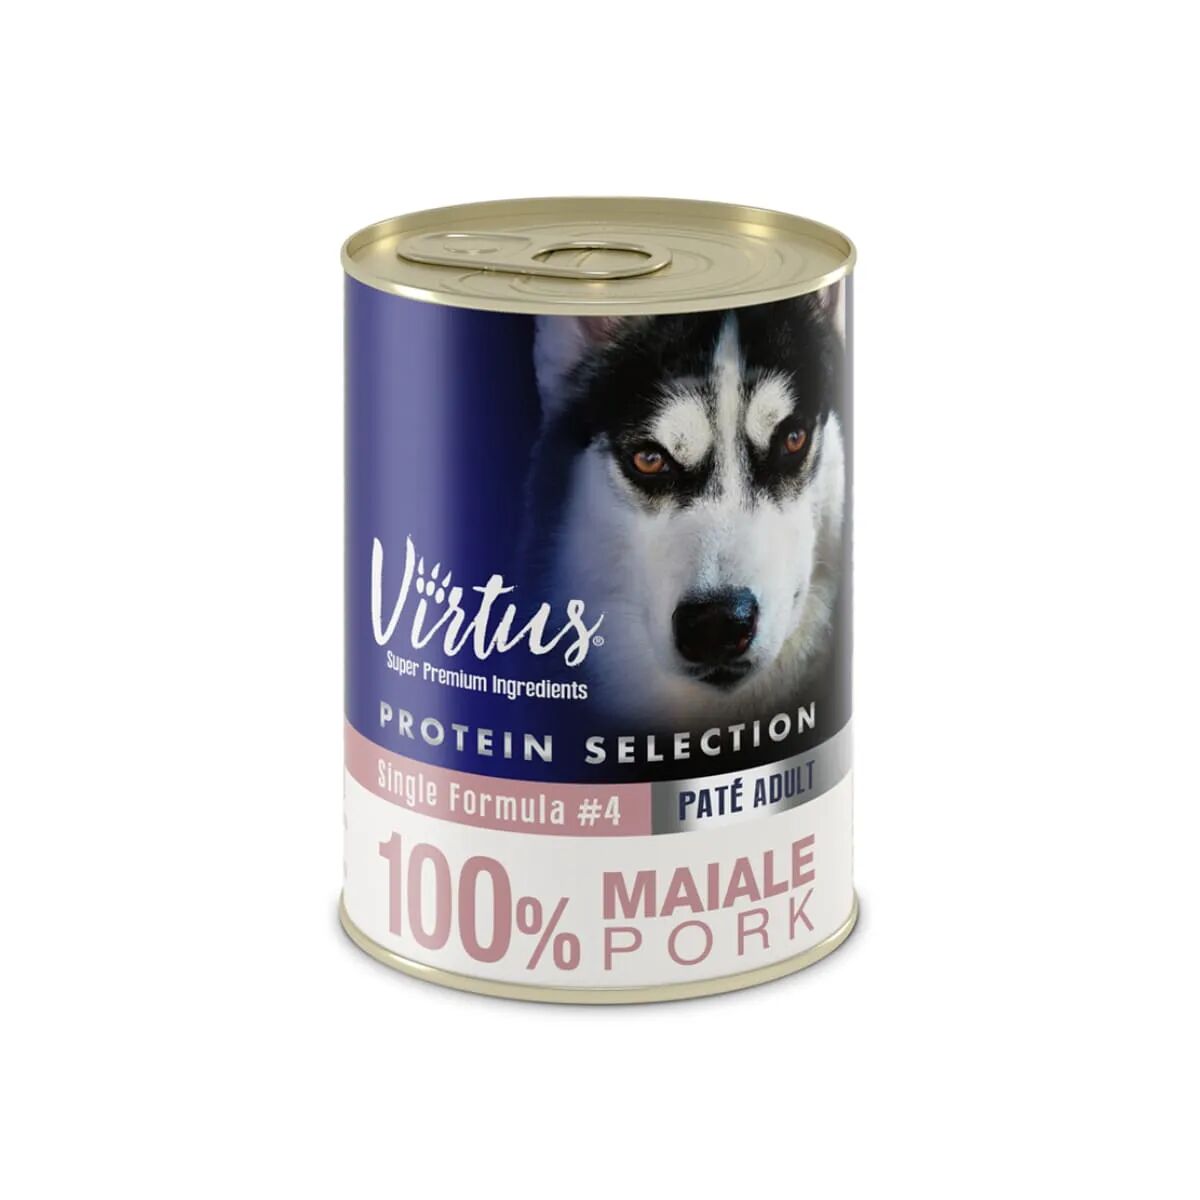 VIRTUS Protein Selection Dog Lattina 400G MAIALE